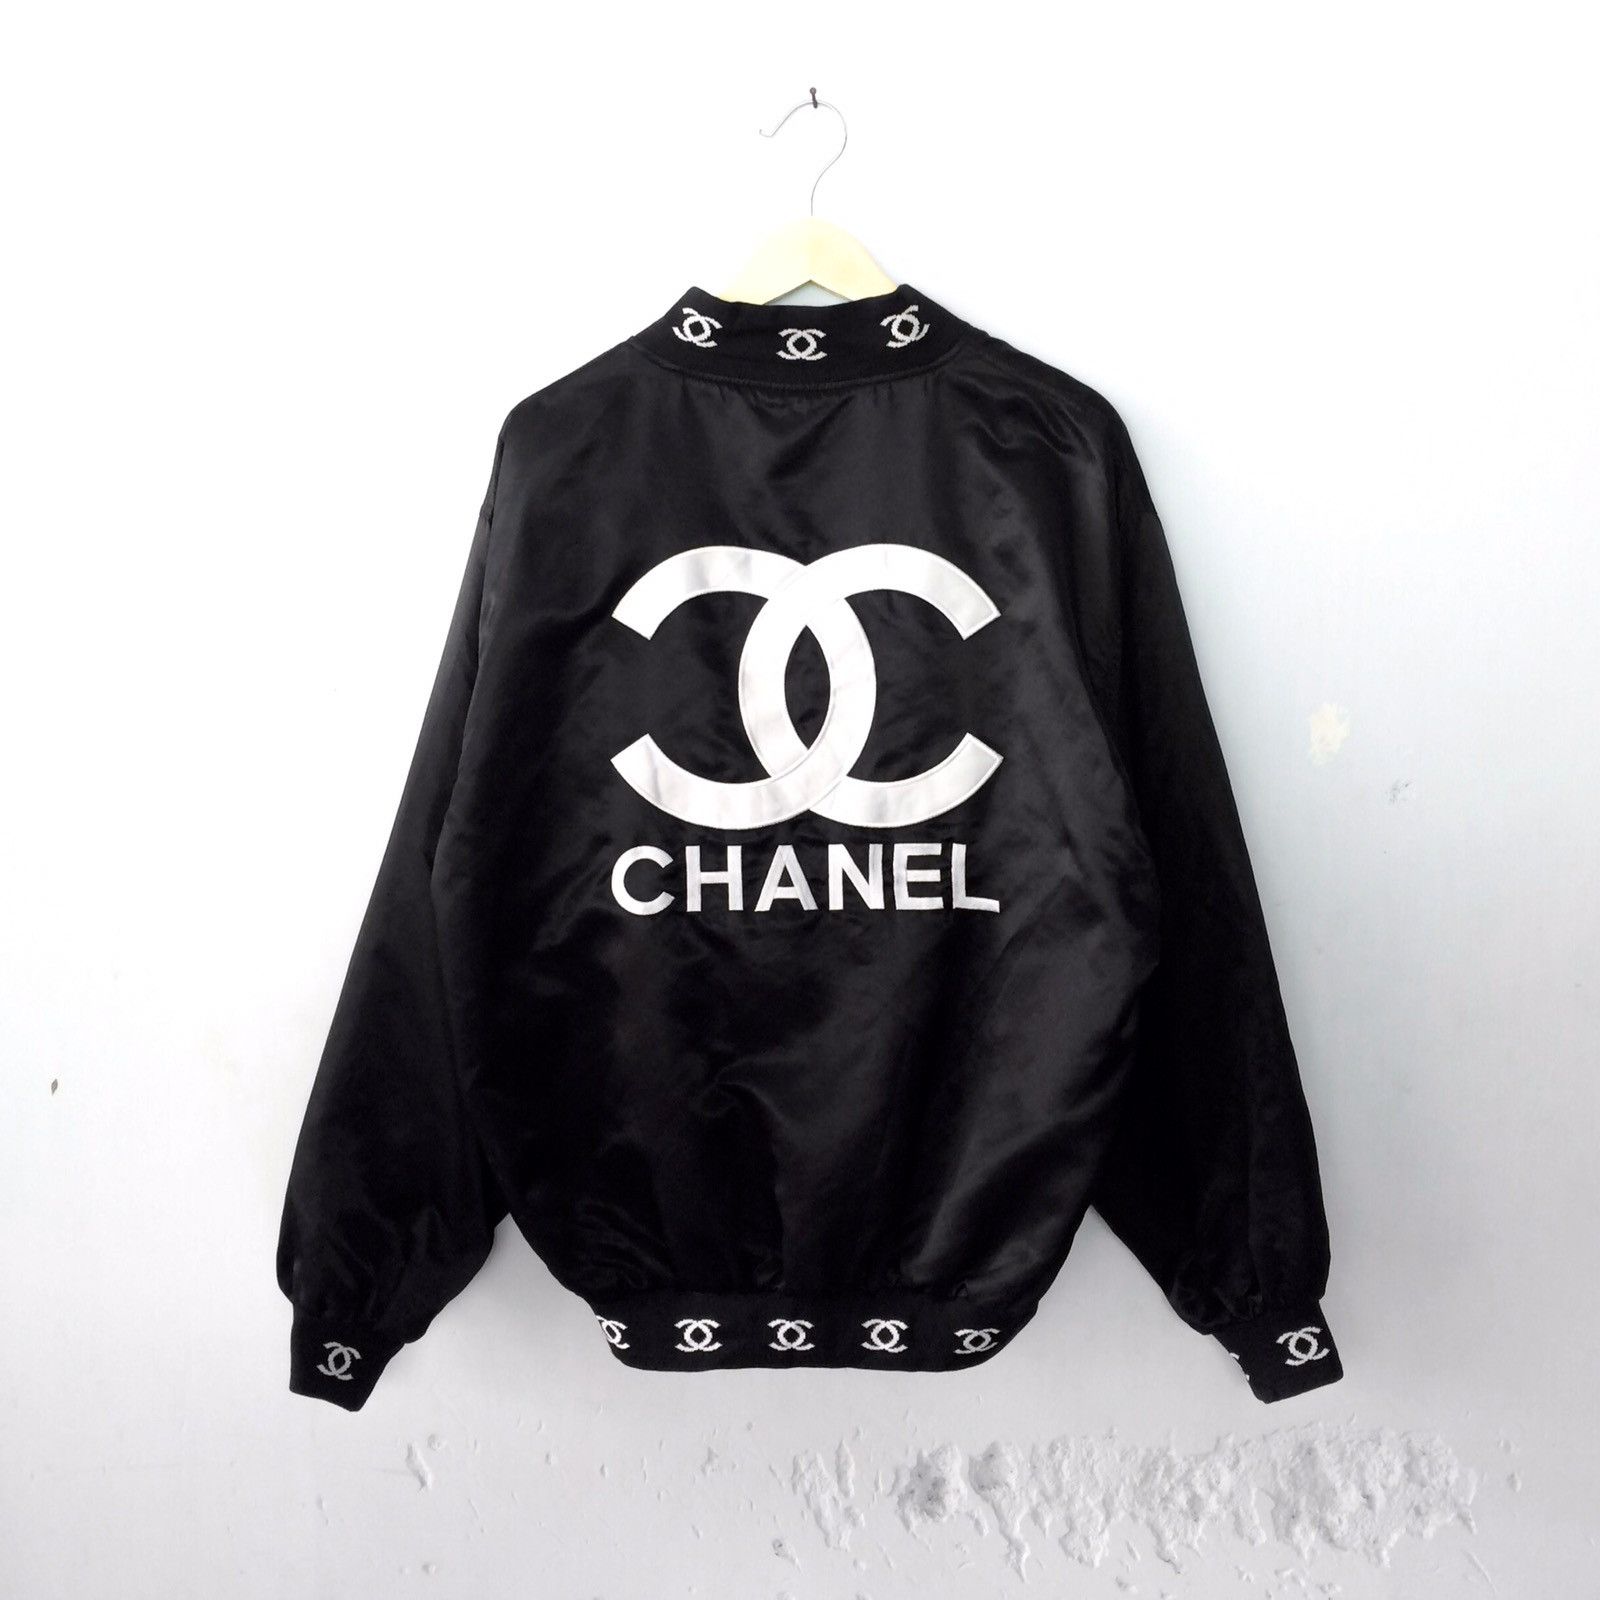 Chanel métiers Graffiti Bomber Jacket